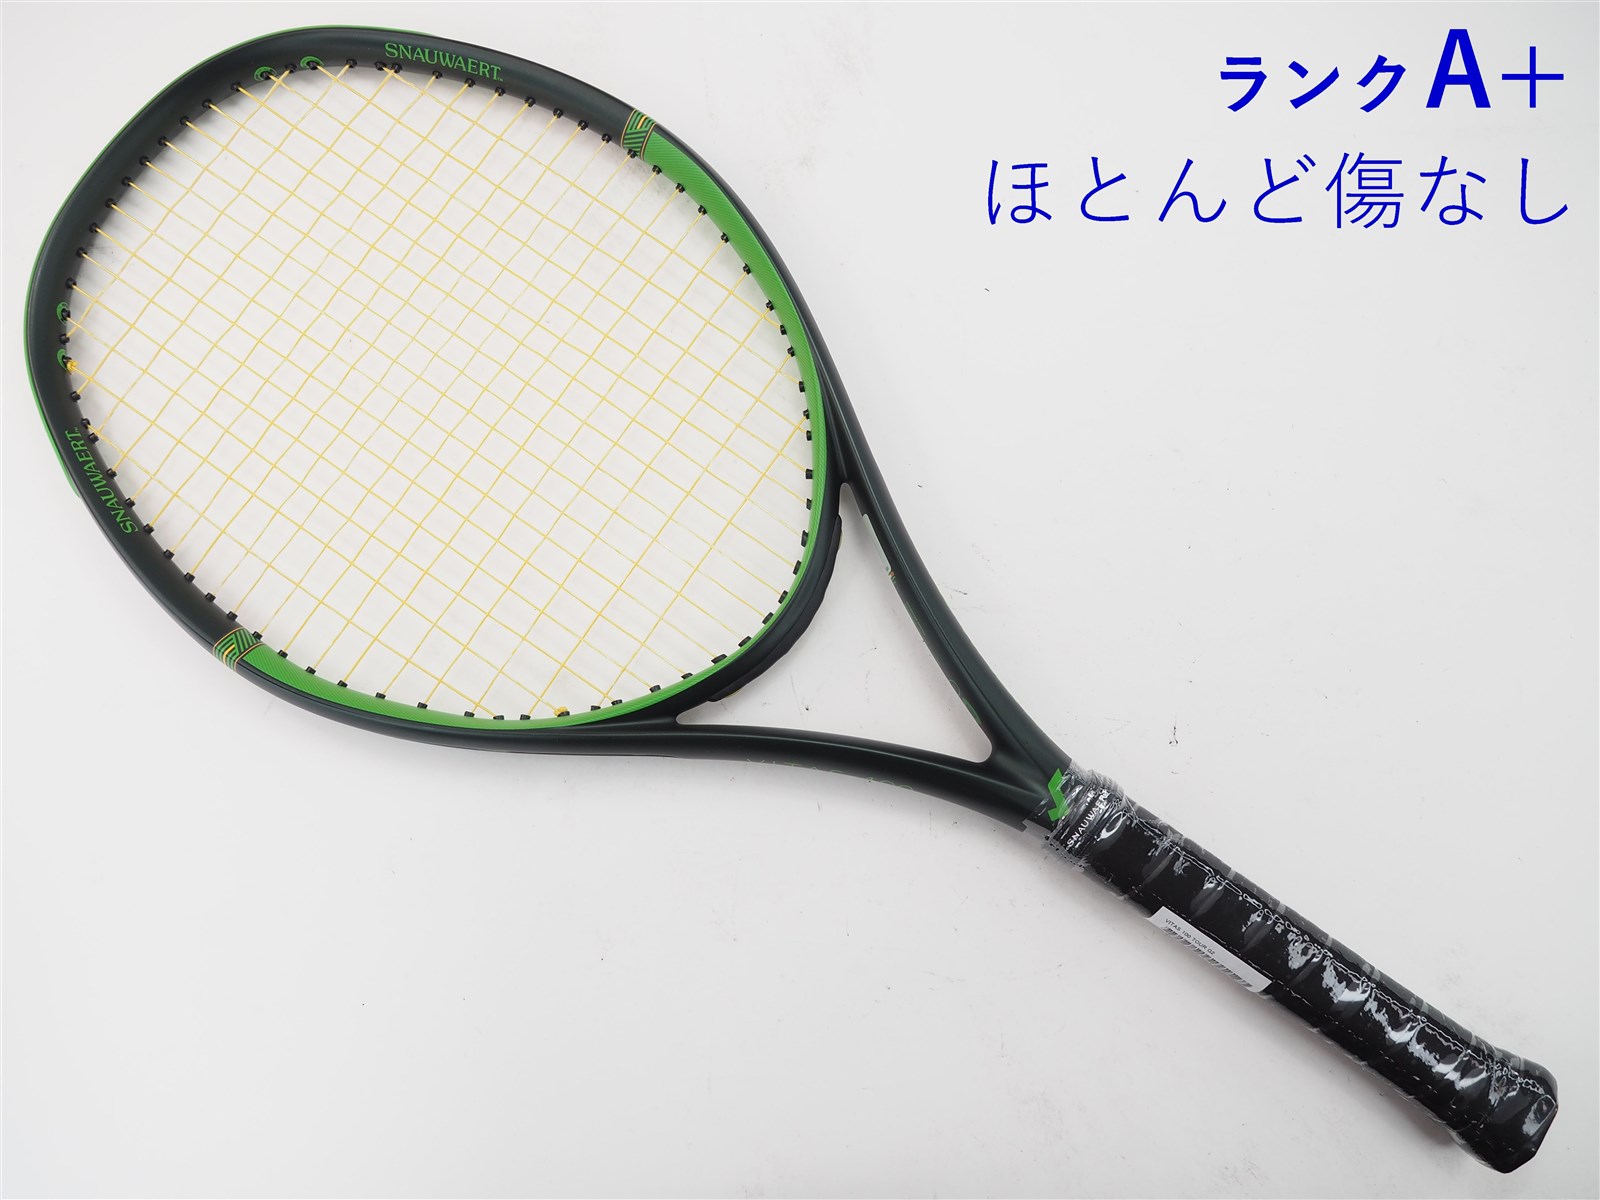 SNAUWAERT VITAS 100R FF 硬式テニスラケット 優れた品質 - ラケット 